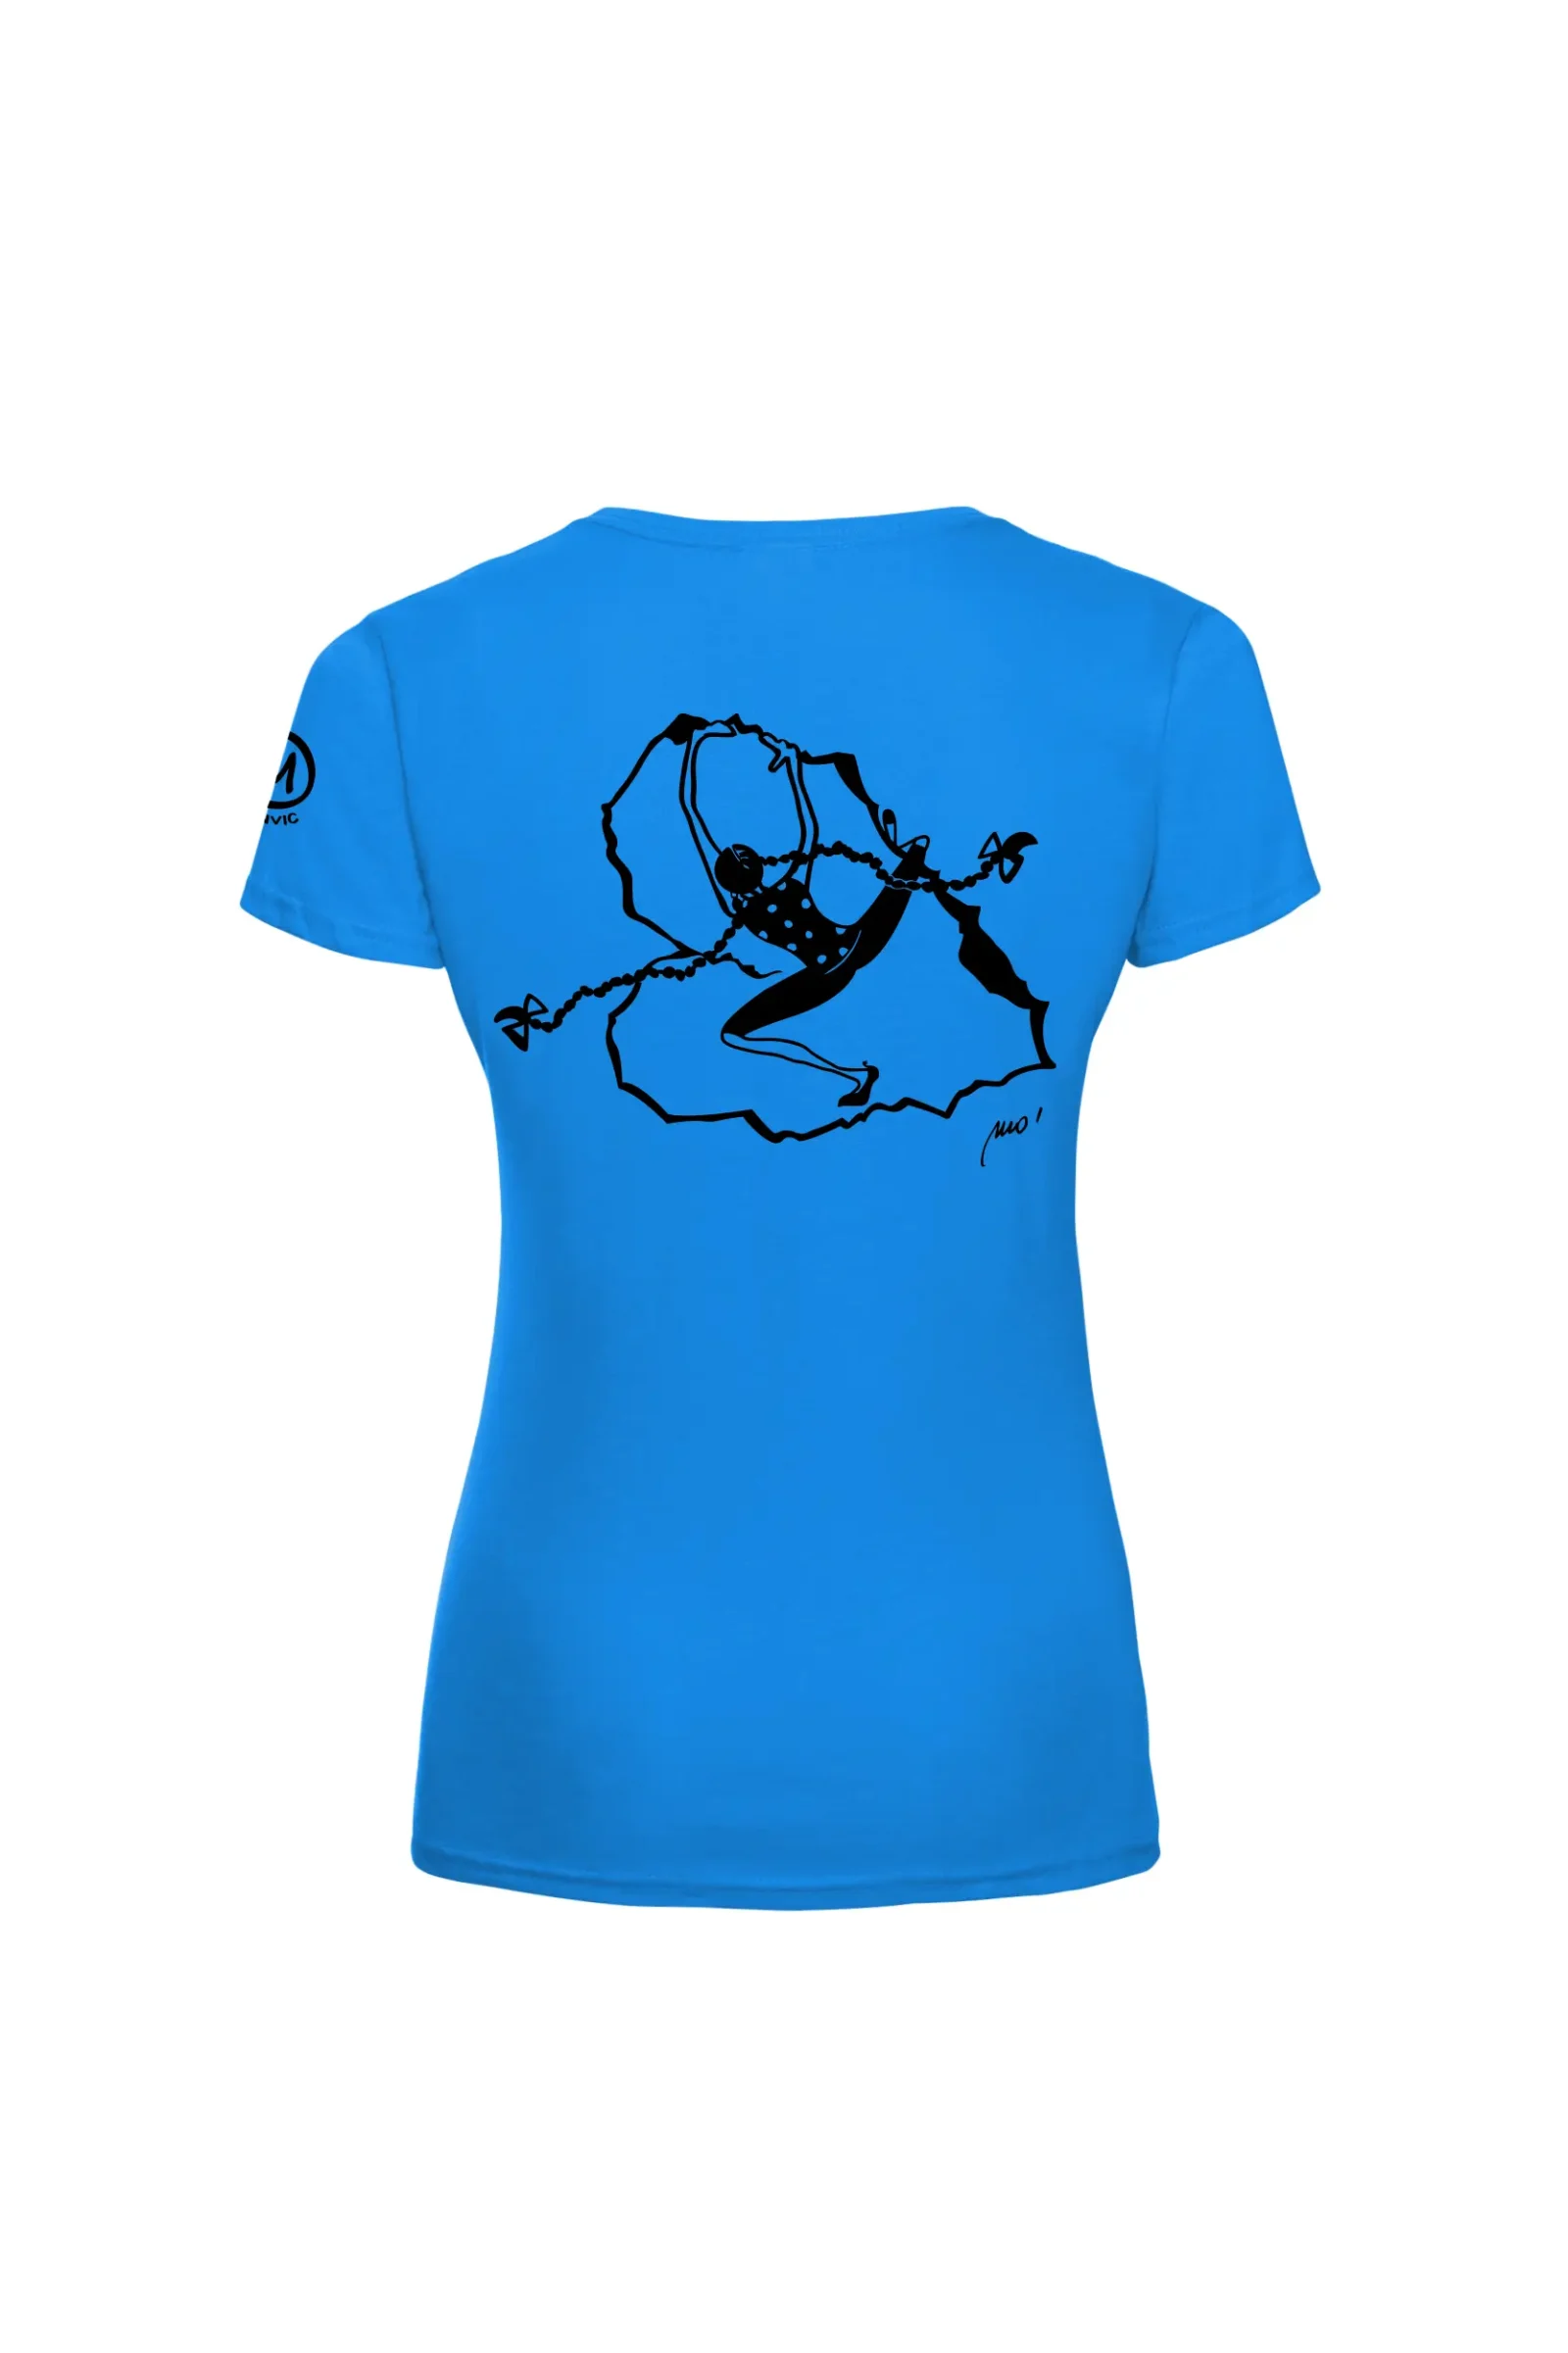 T-shirt escalade femme - coton bleu clair - graphisme "Heart of the Rock" - SHARON by MONVIC